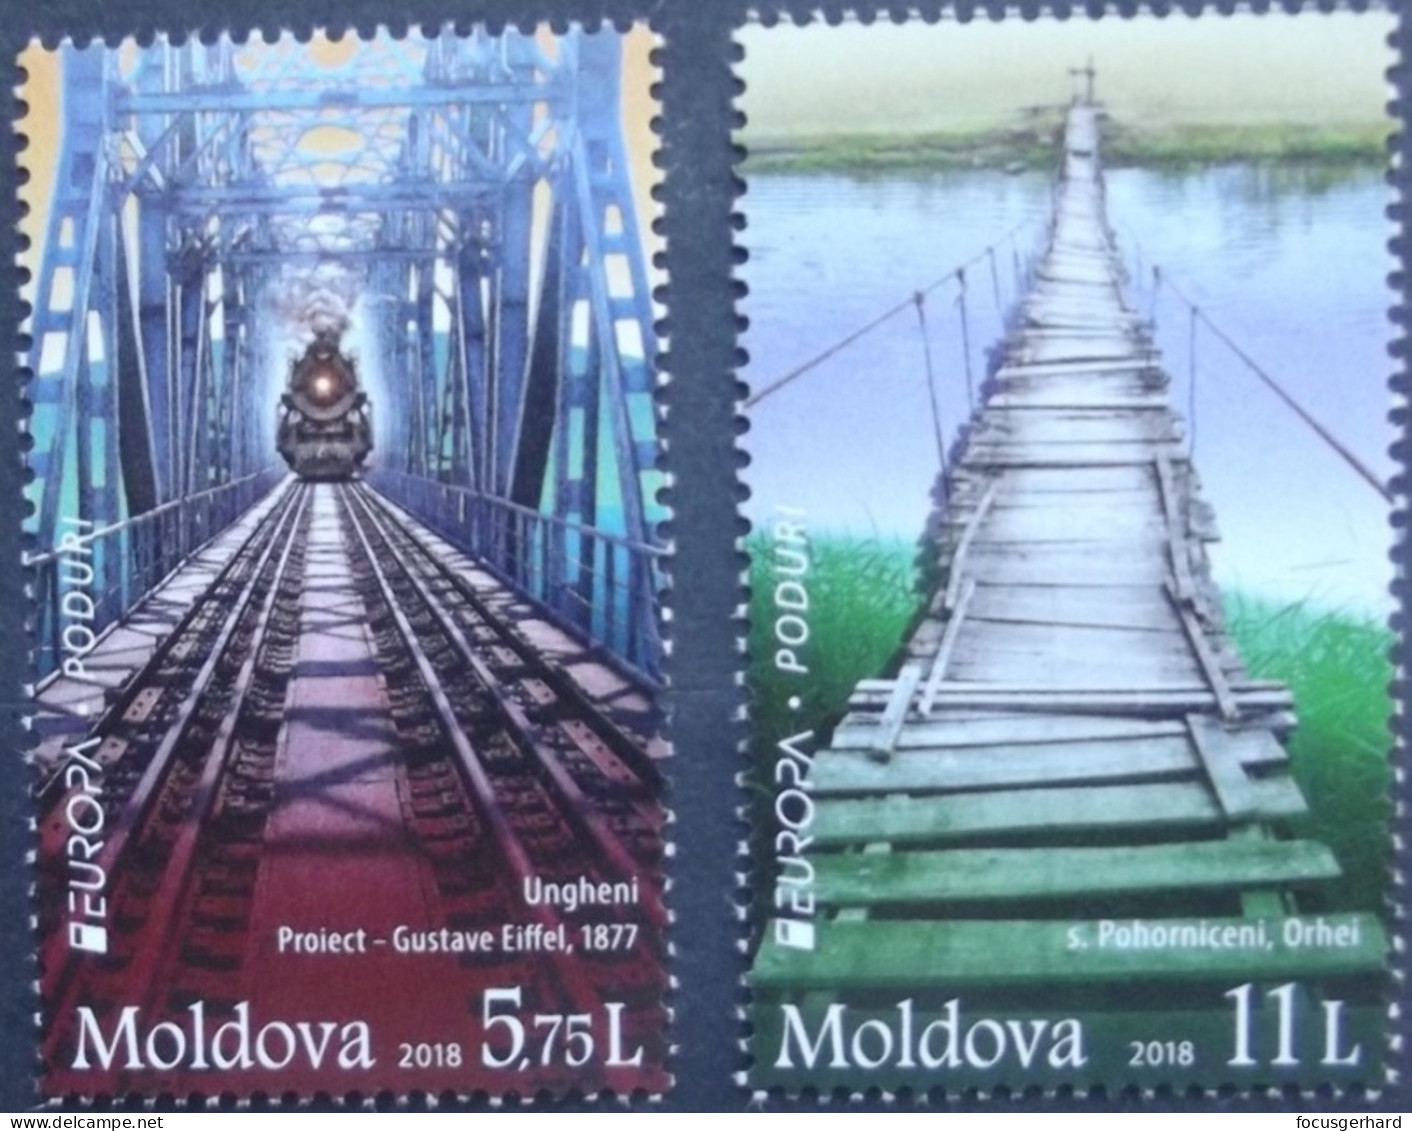 Moldawien    Europa Cept   Brücken   2018    ** - 2018